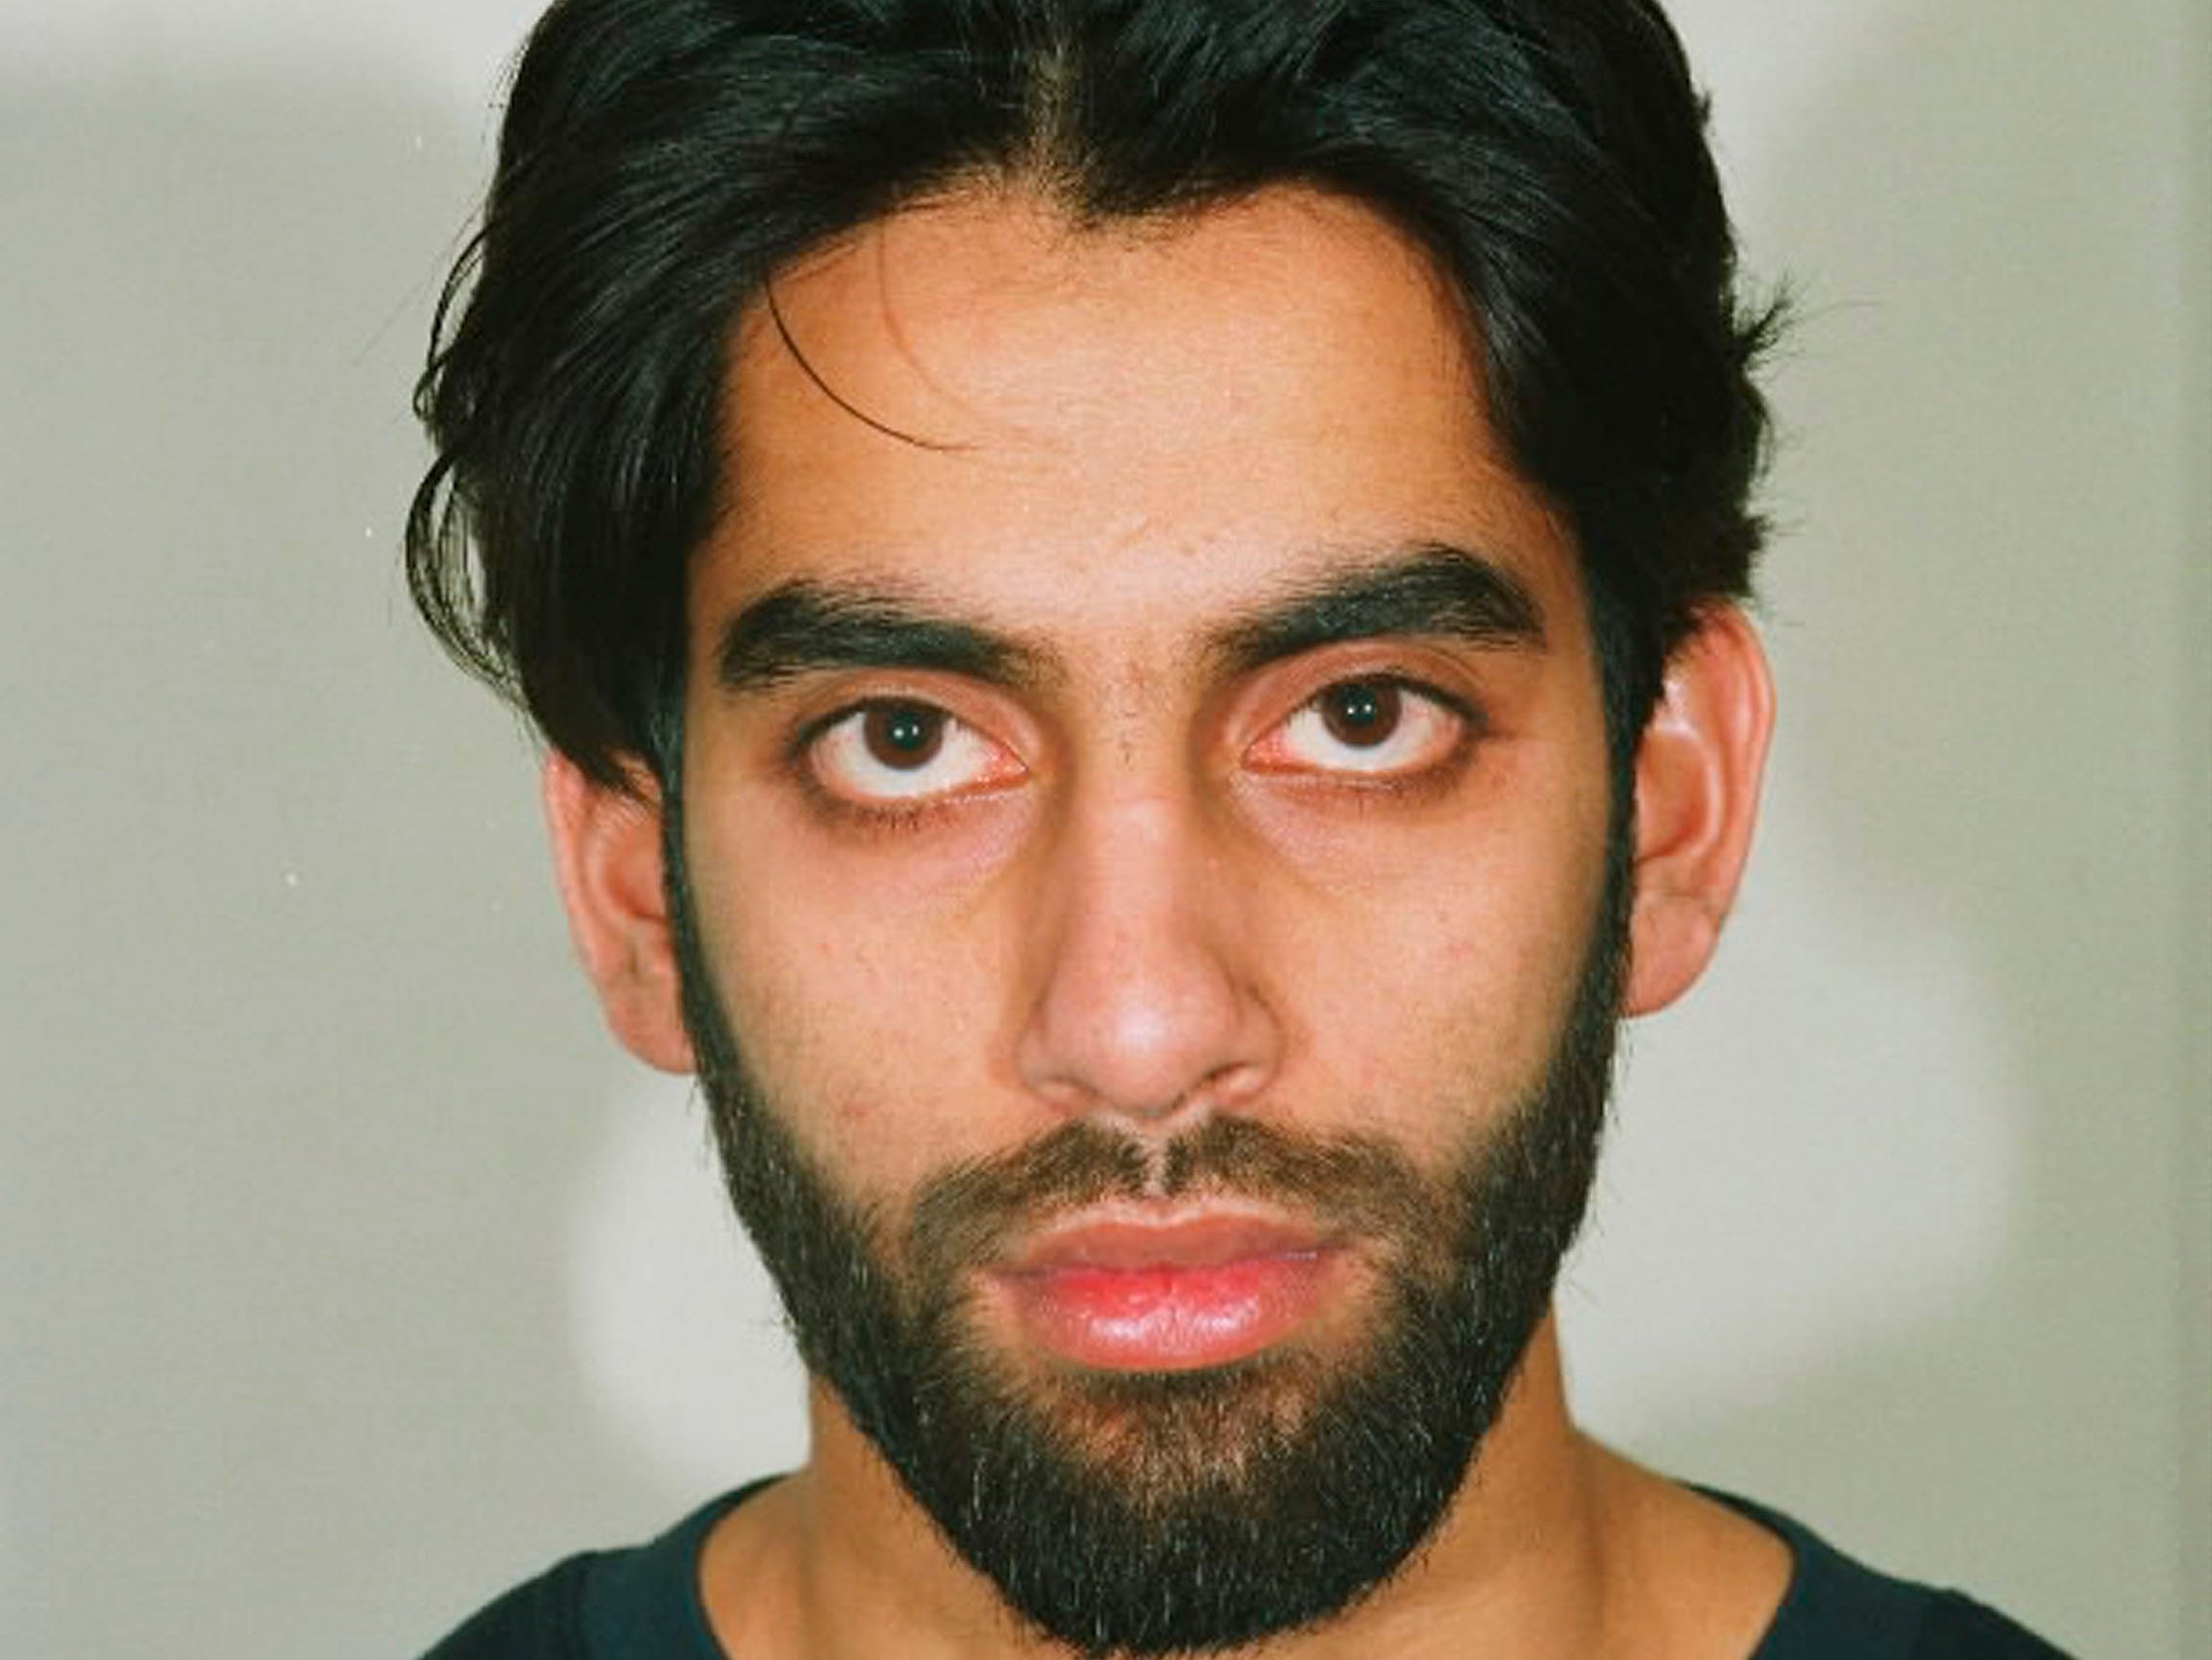 Jawad Akbar was jailed in 2007 over the fertiliser bomb plot